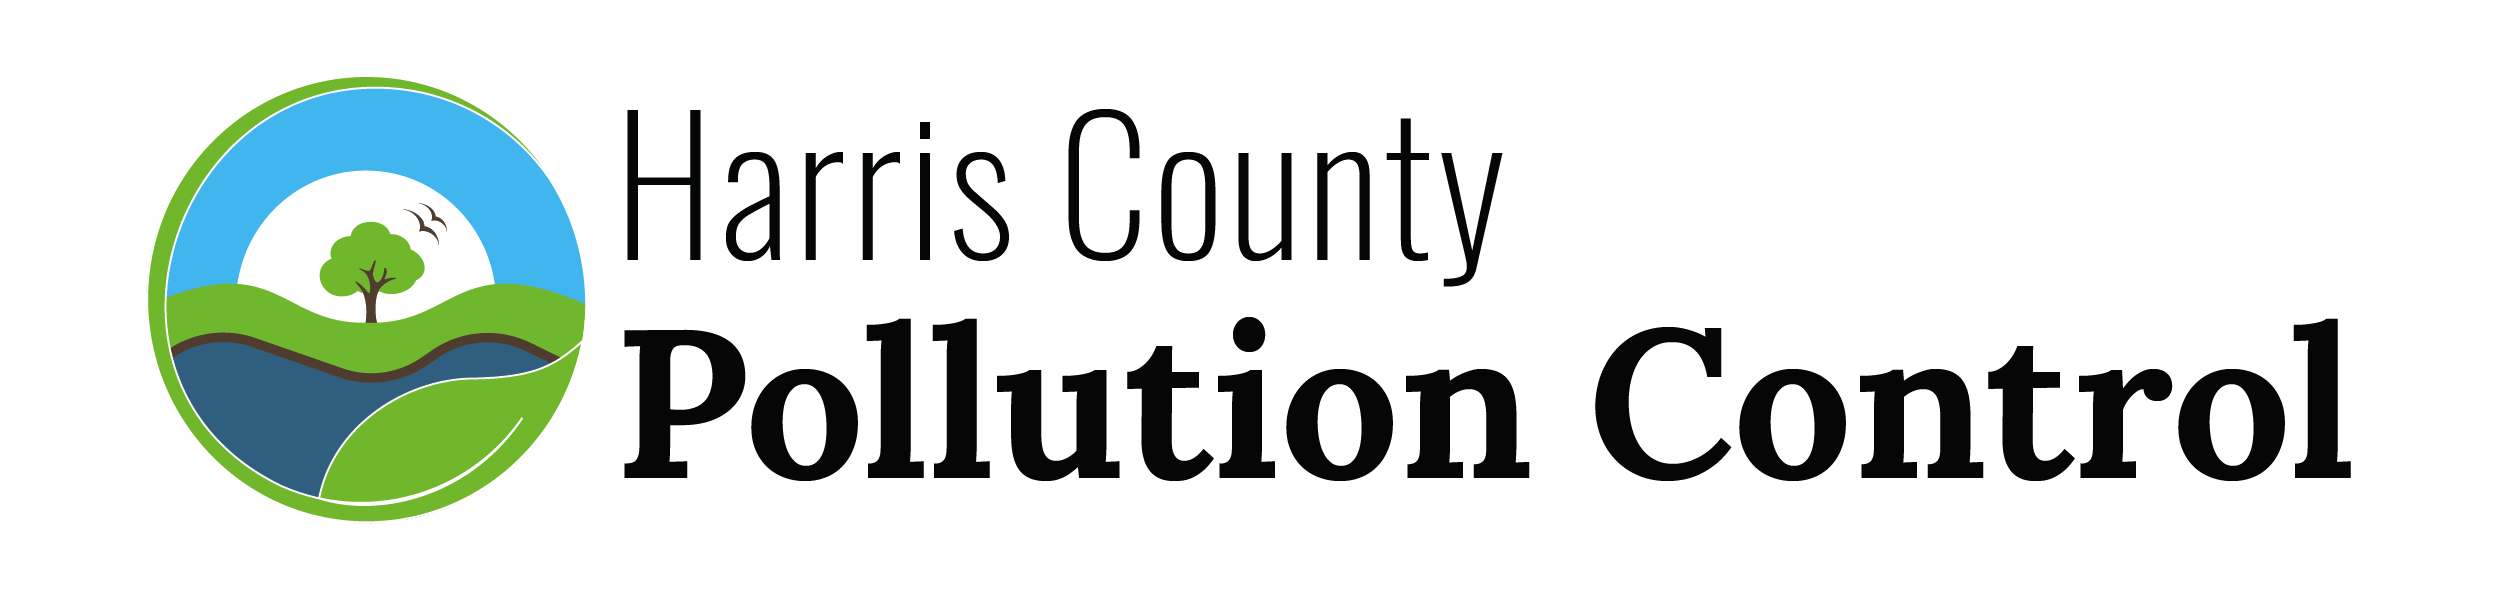 Harris County Pollution Control Services Logo